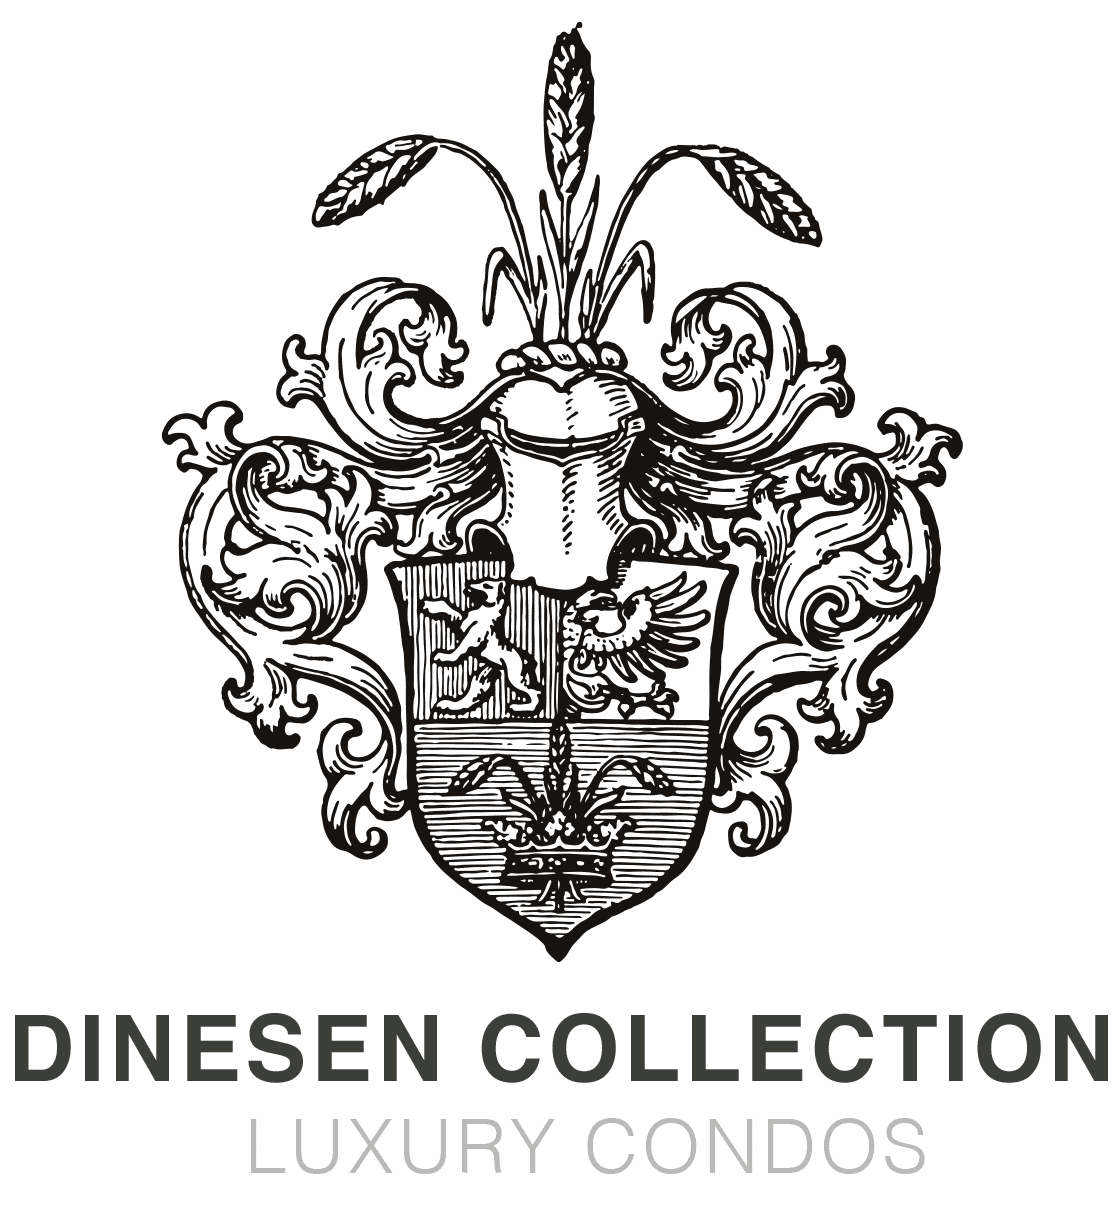 Dinesen Collection Luxury Condos